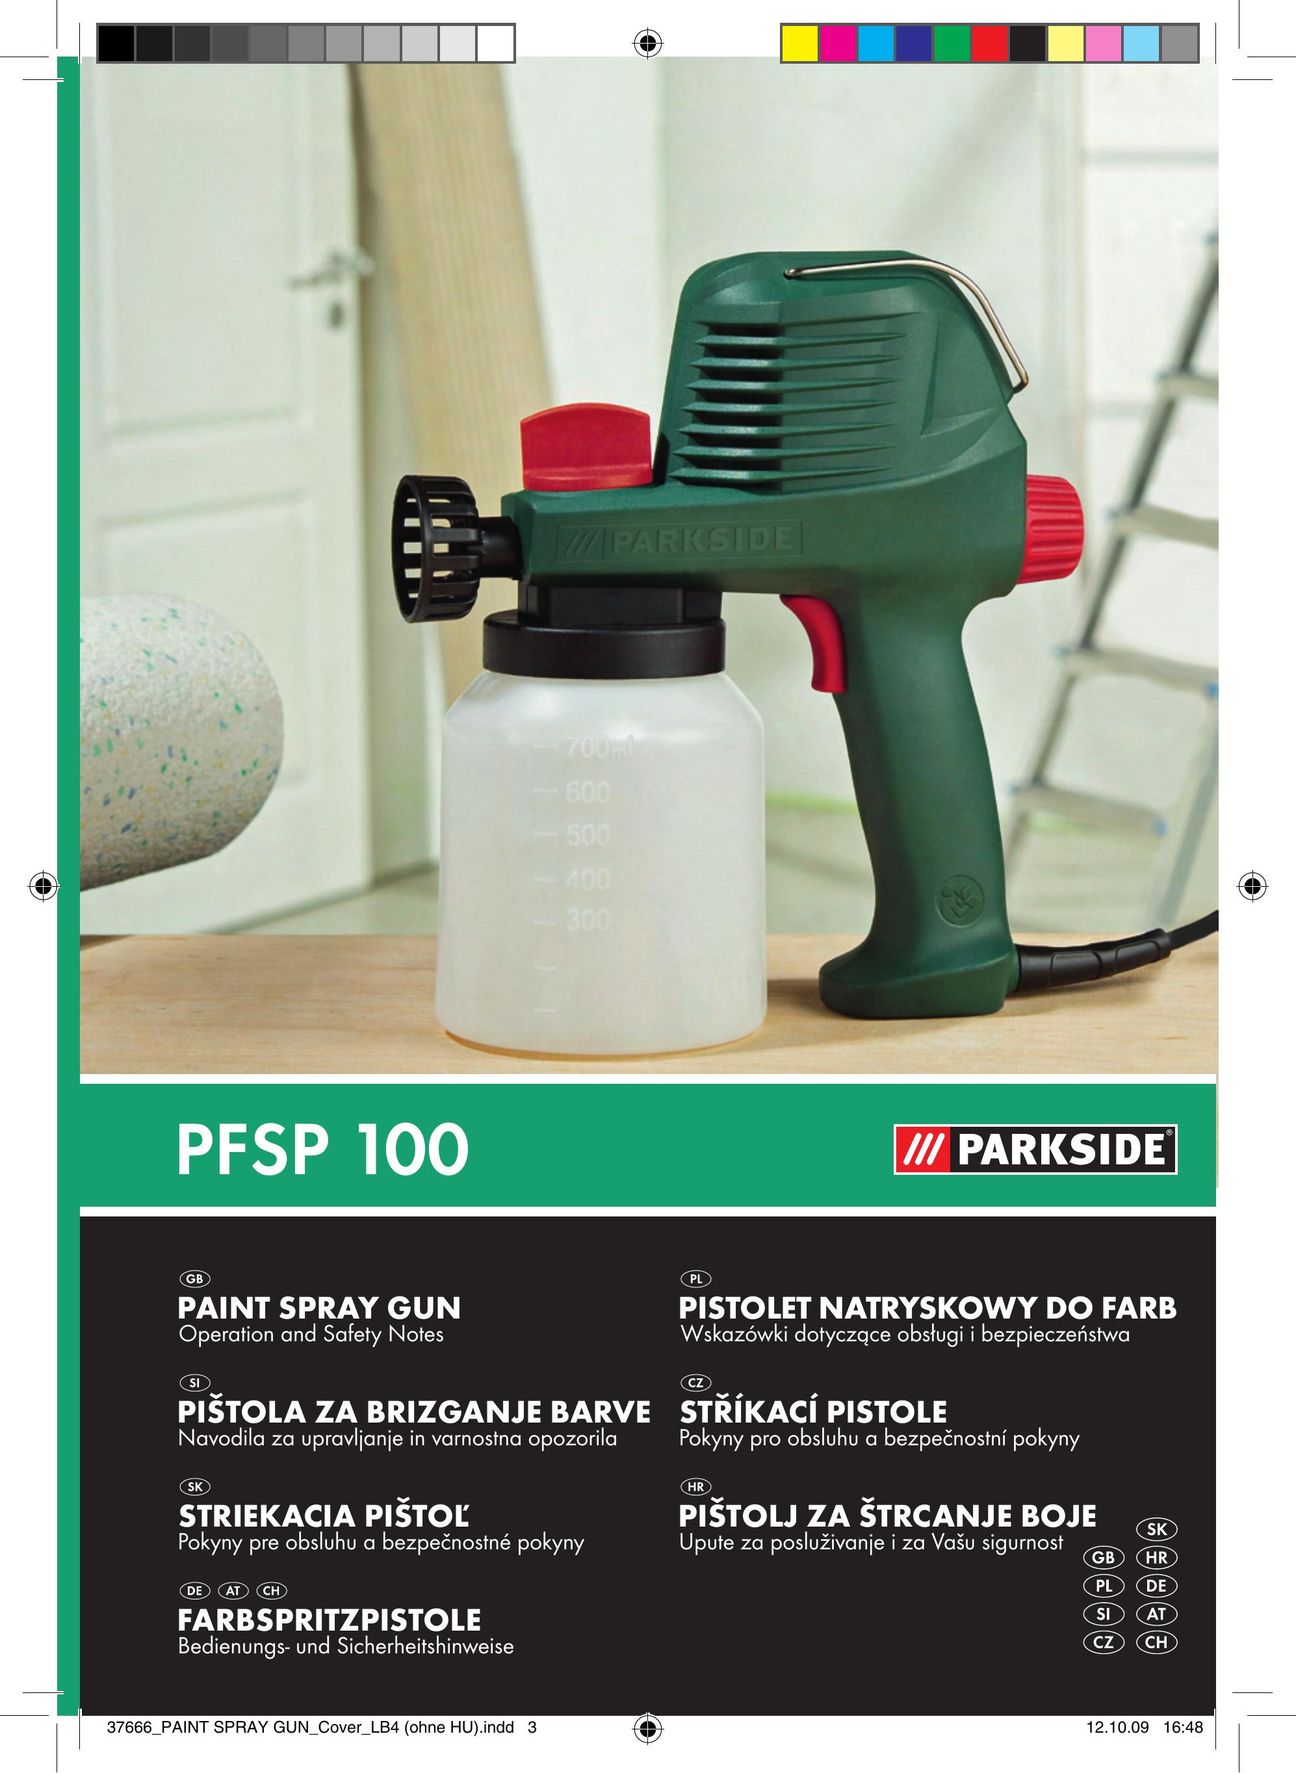 Parkside PFSP 100 Paint Sprayer User Manual